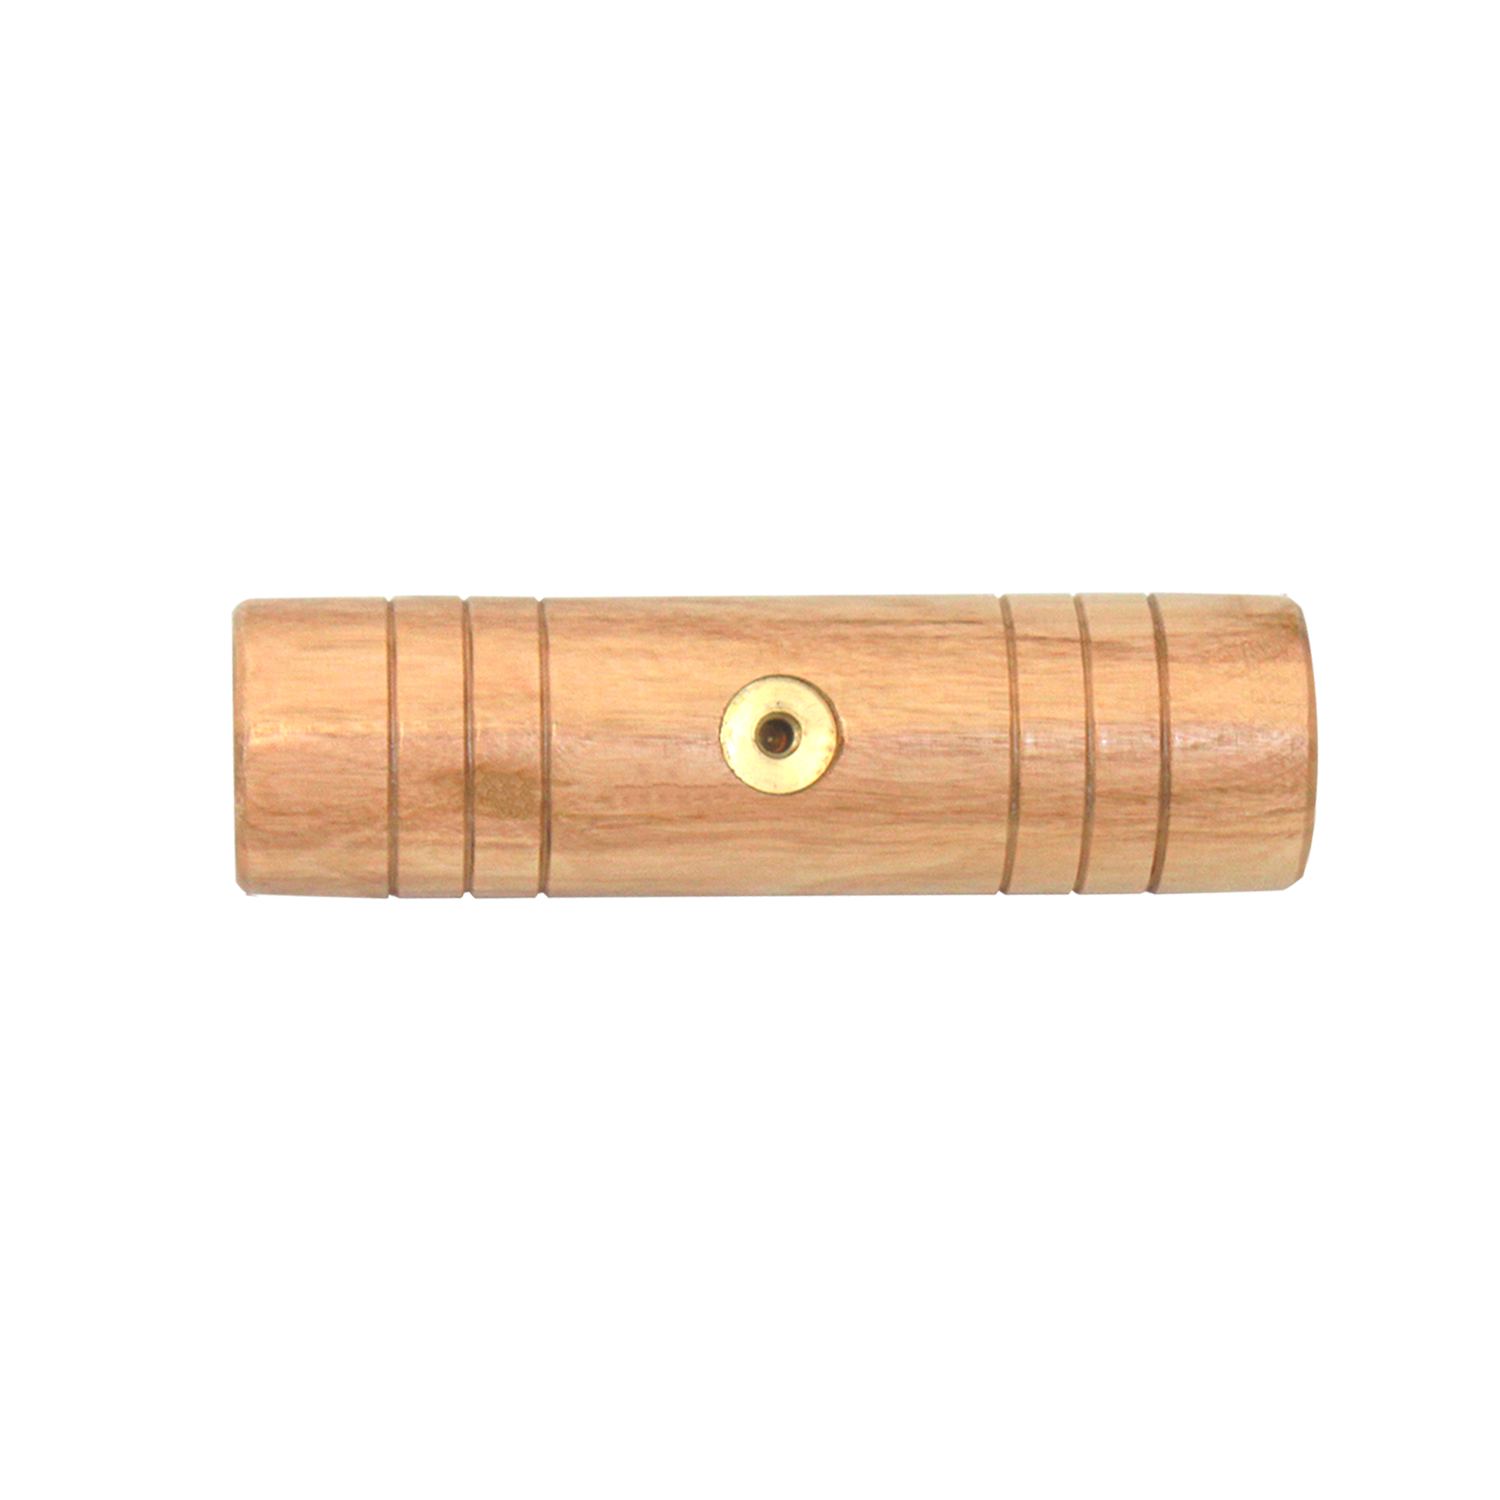 Hurlingham Croquet Mallet (Brass bound head) - Wood Mallets